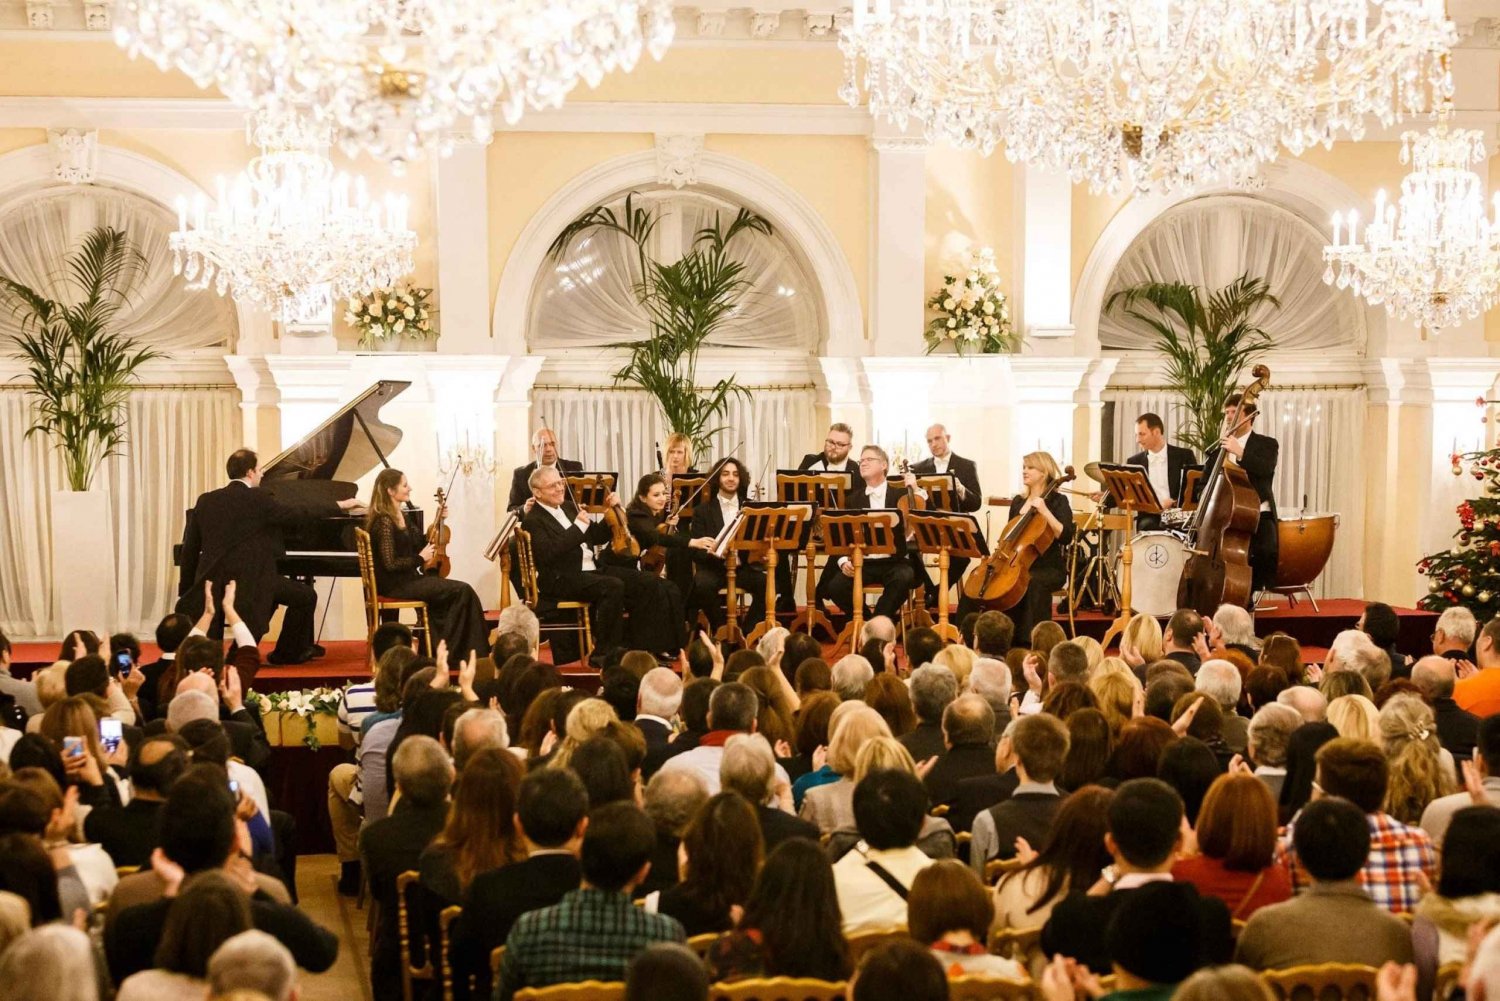 Wien: Nytårskoncert med Strauss og Mozart i Kursalon